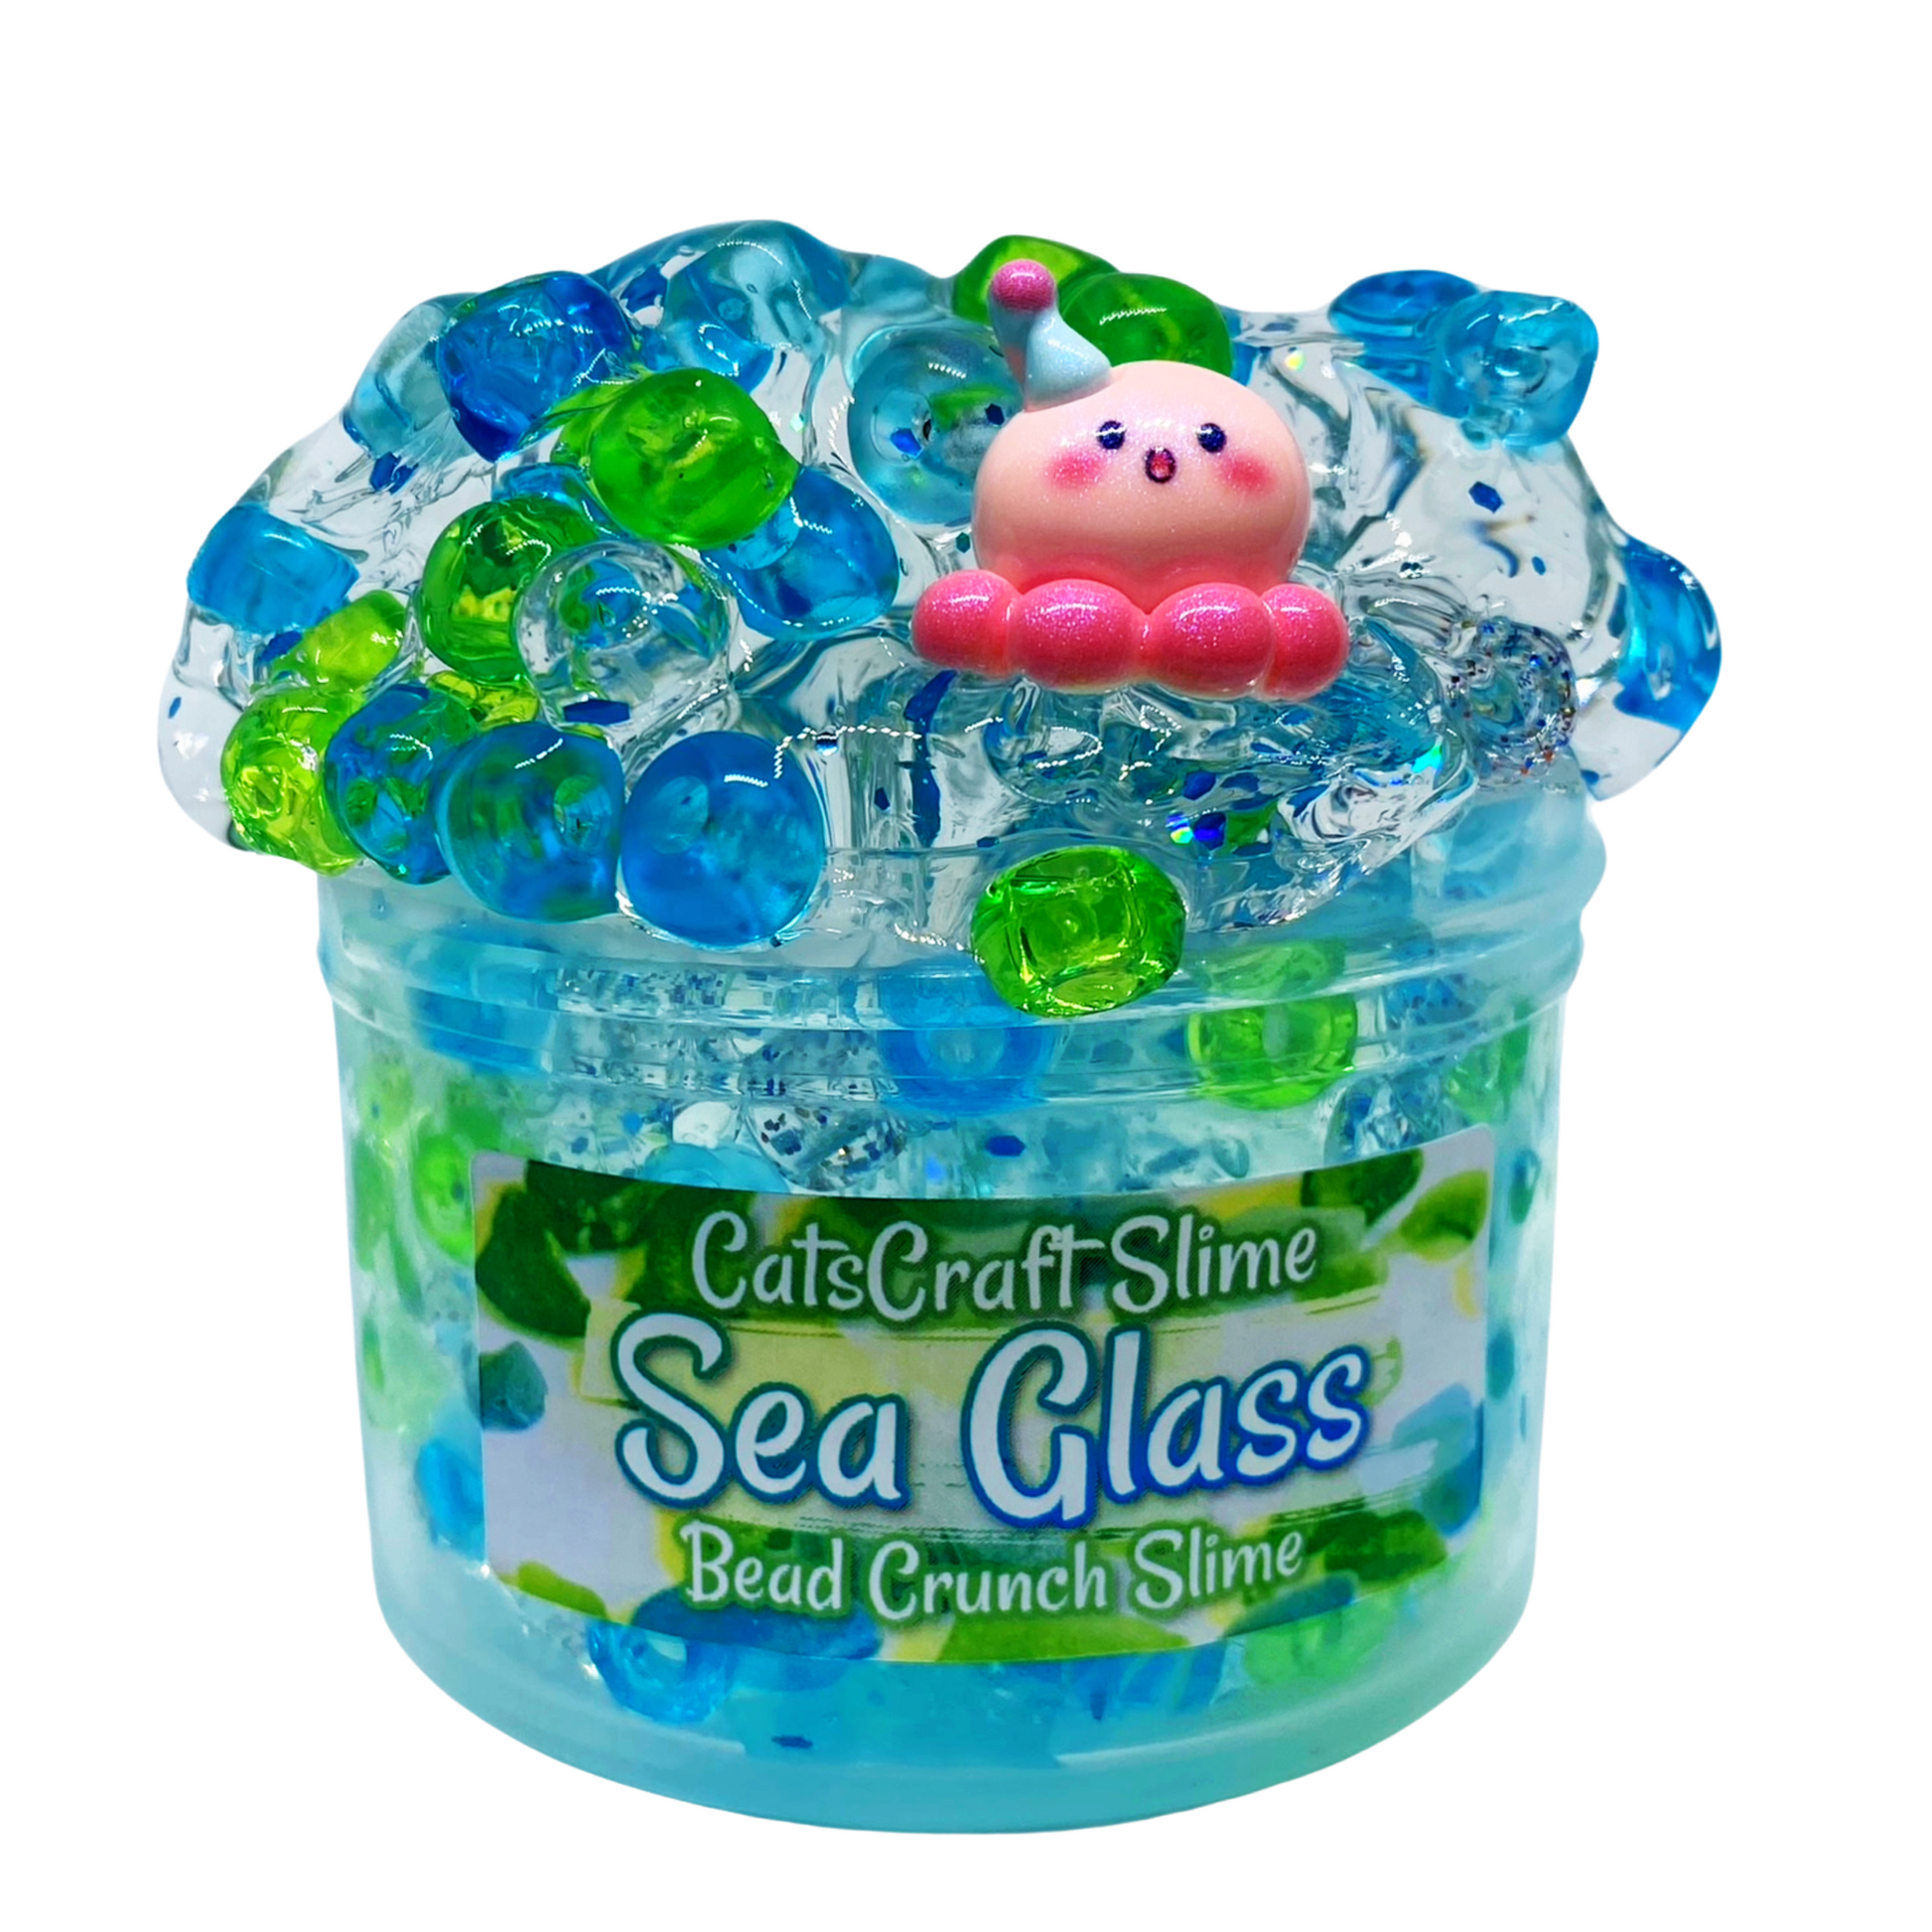 Jelly Slime Fruit Jelly Scented Slime Inflating Soft ASMR 6 oz –  CatsCraftSlime